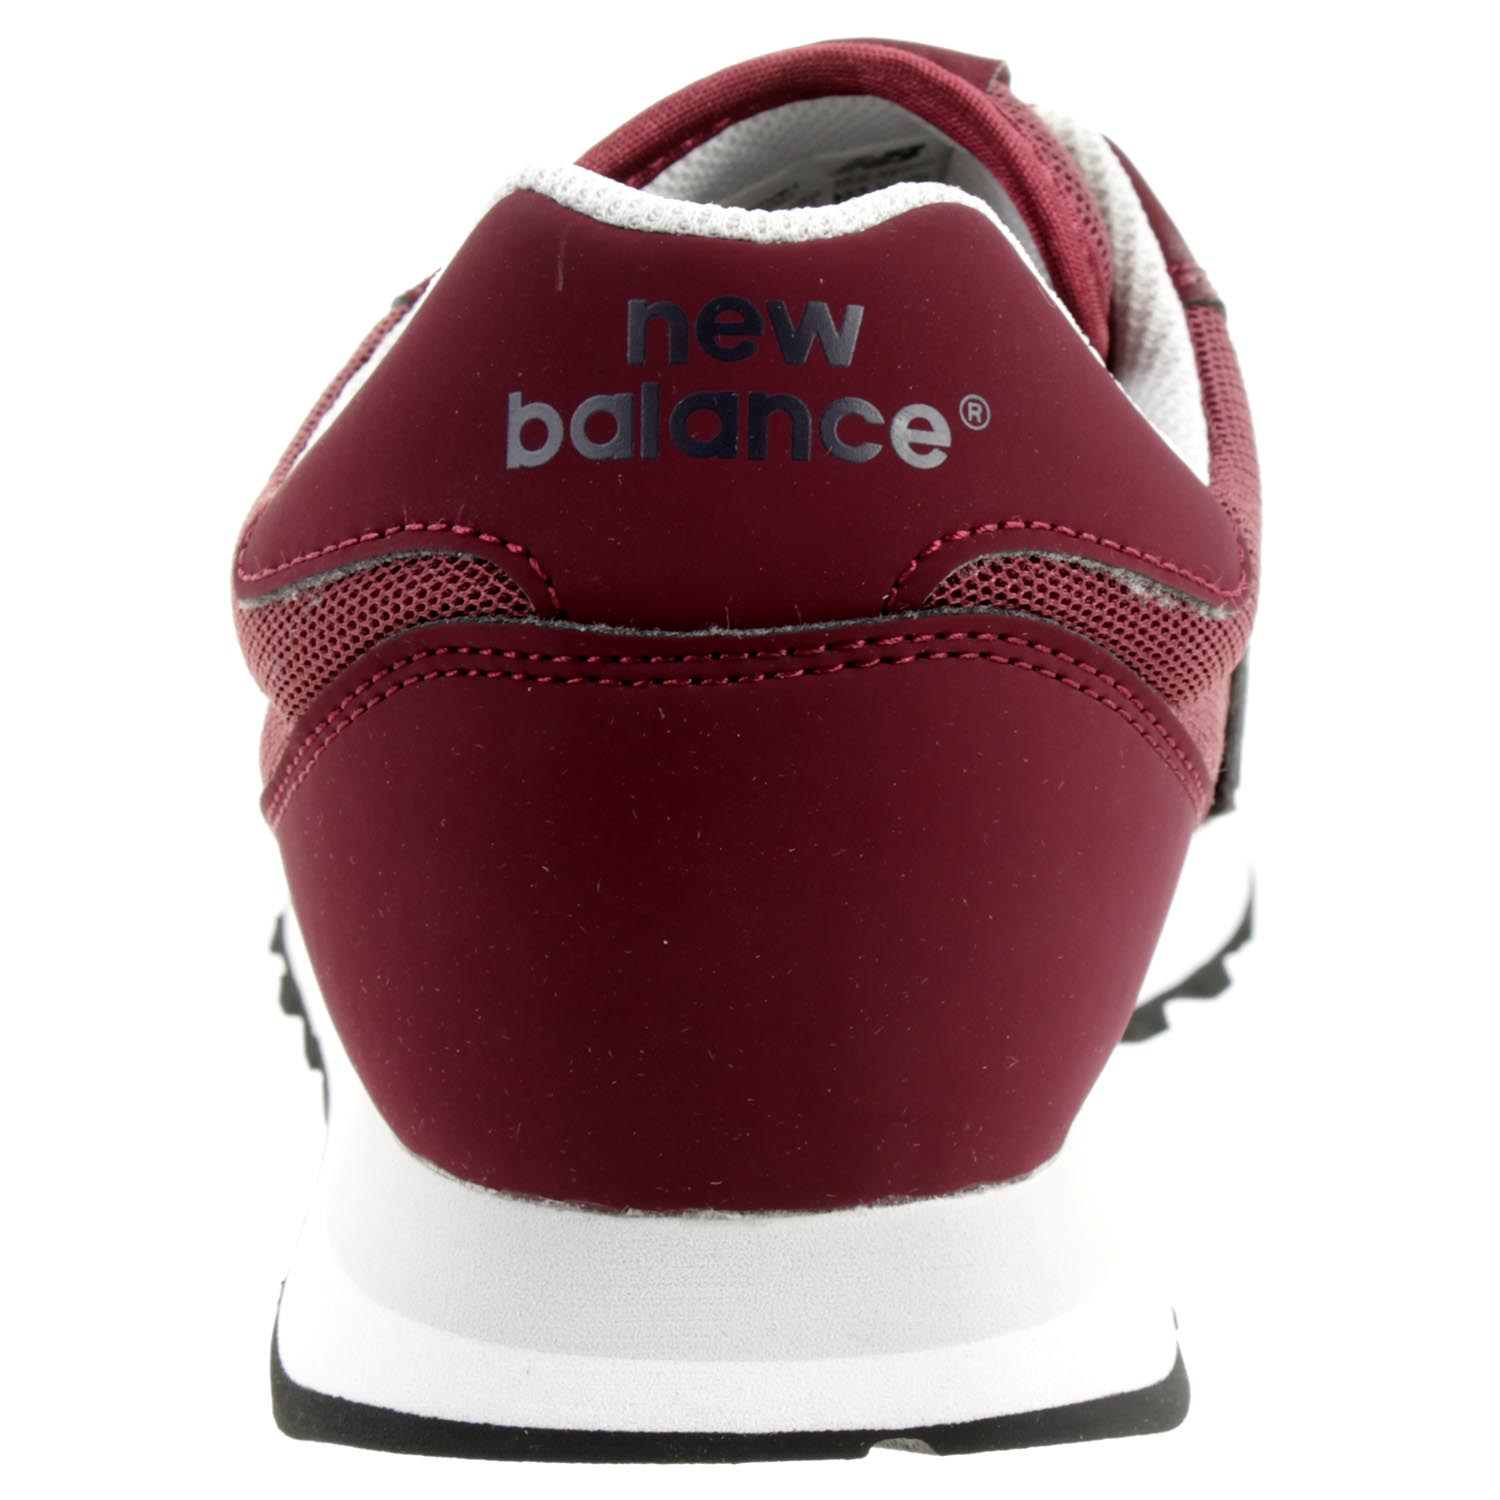 New Balance GM500 VE1 Lifestyle Sneaker Herren Turnschuhe bordeaux